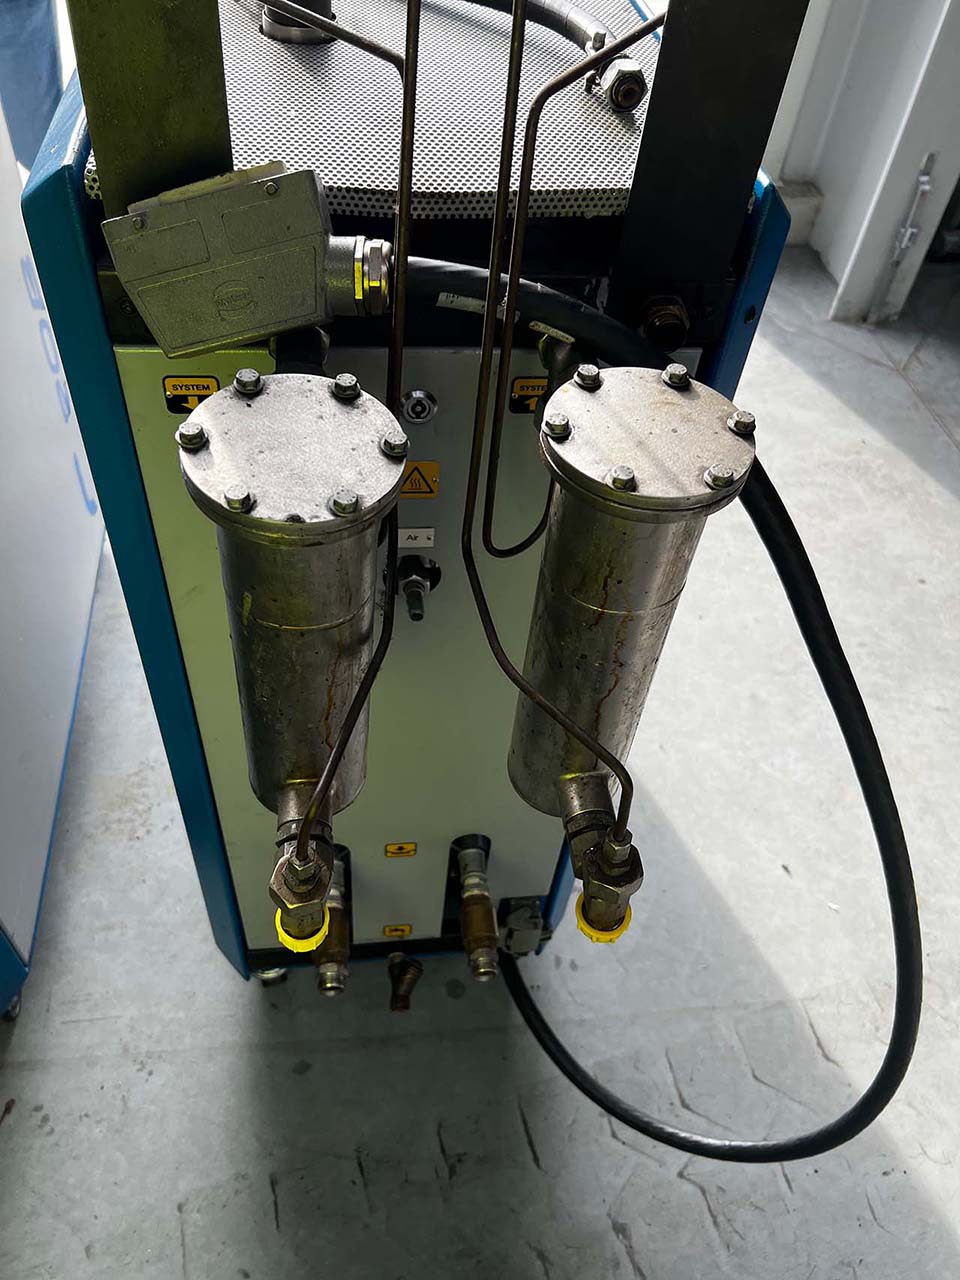 Robamat Thermocast 5212 oil temperature control unit ZU2200, used